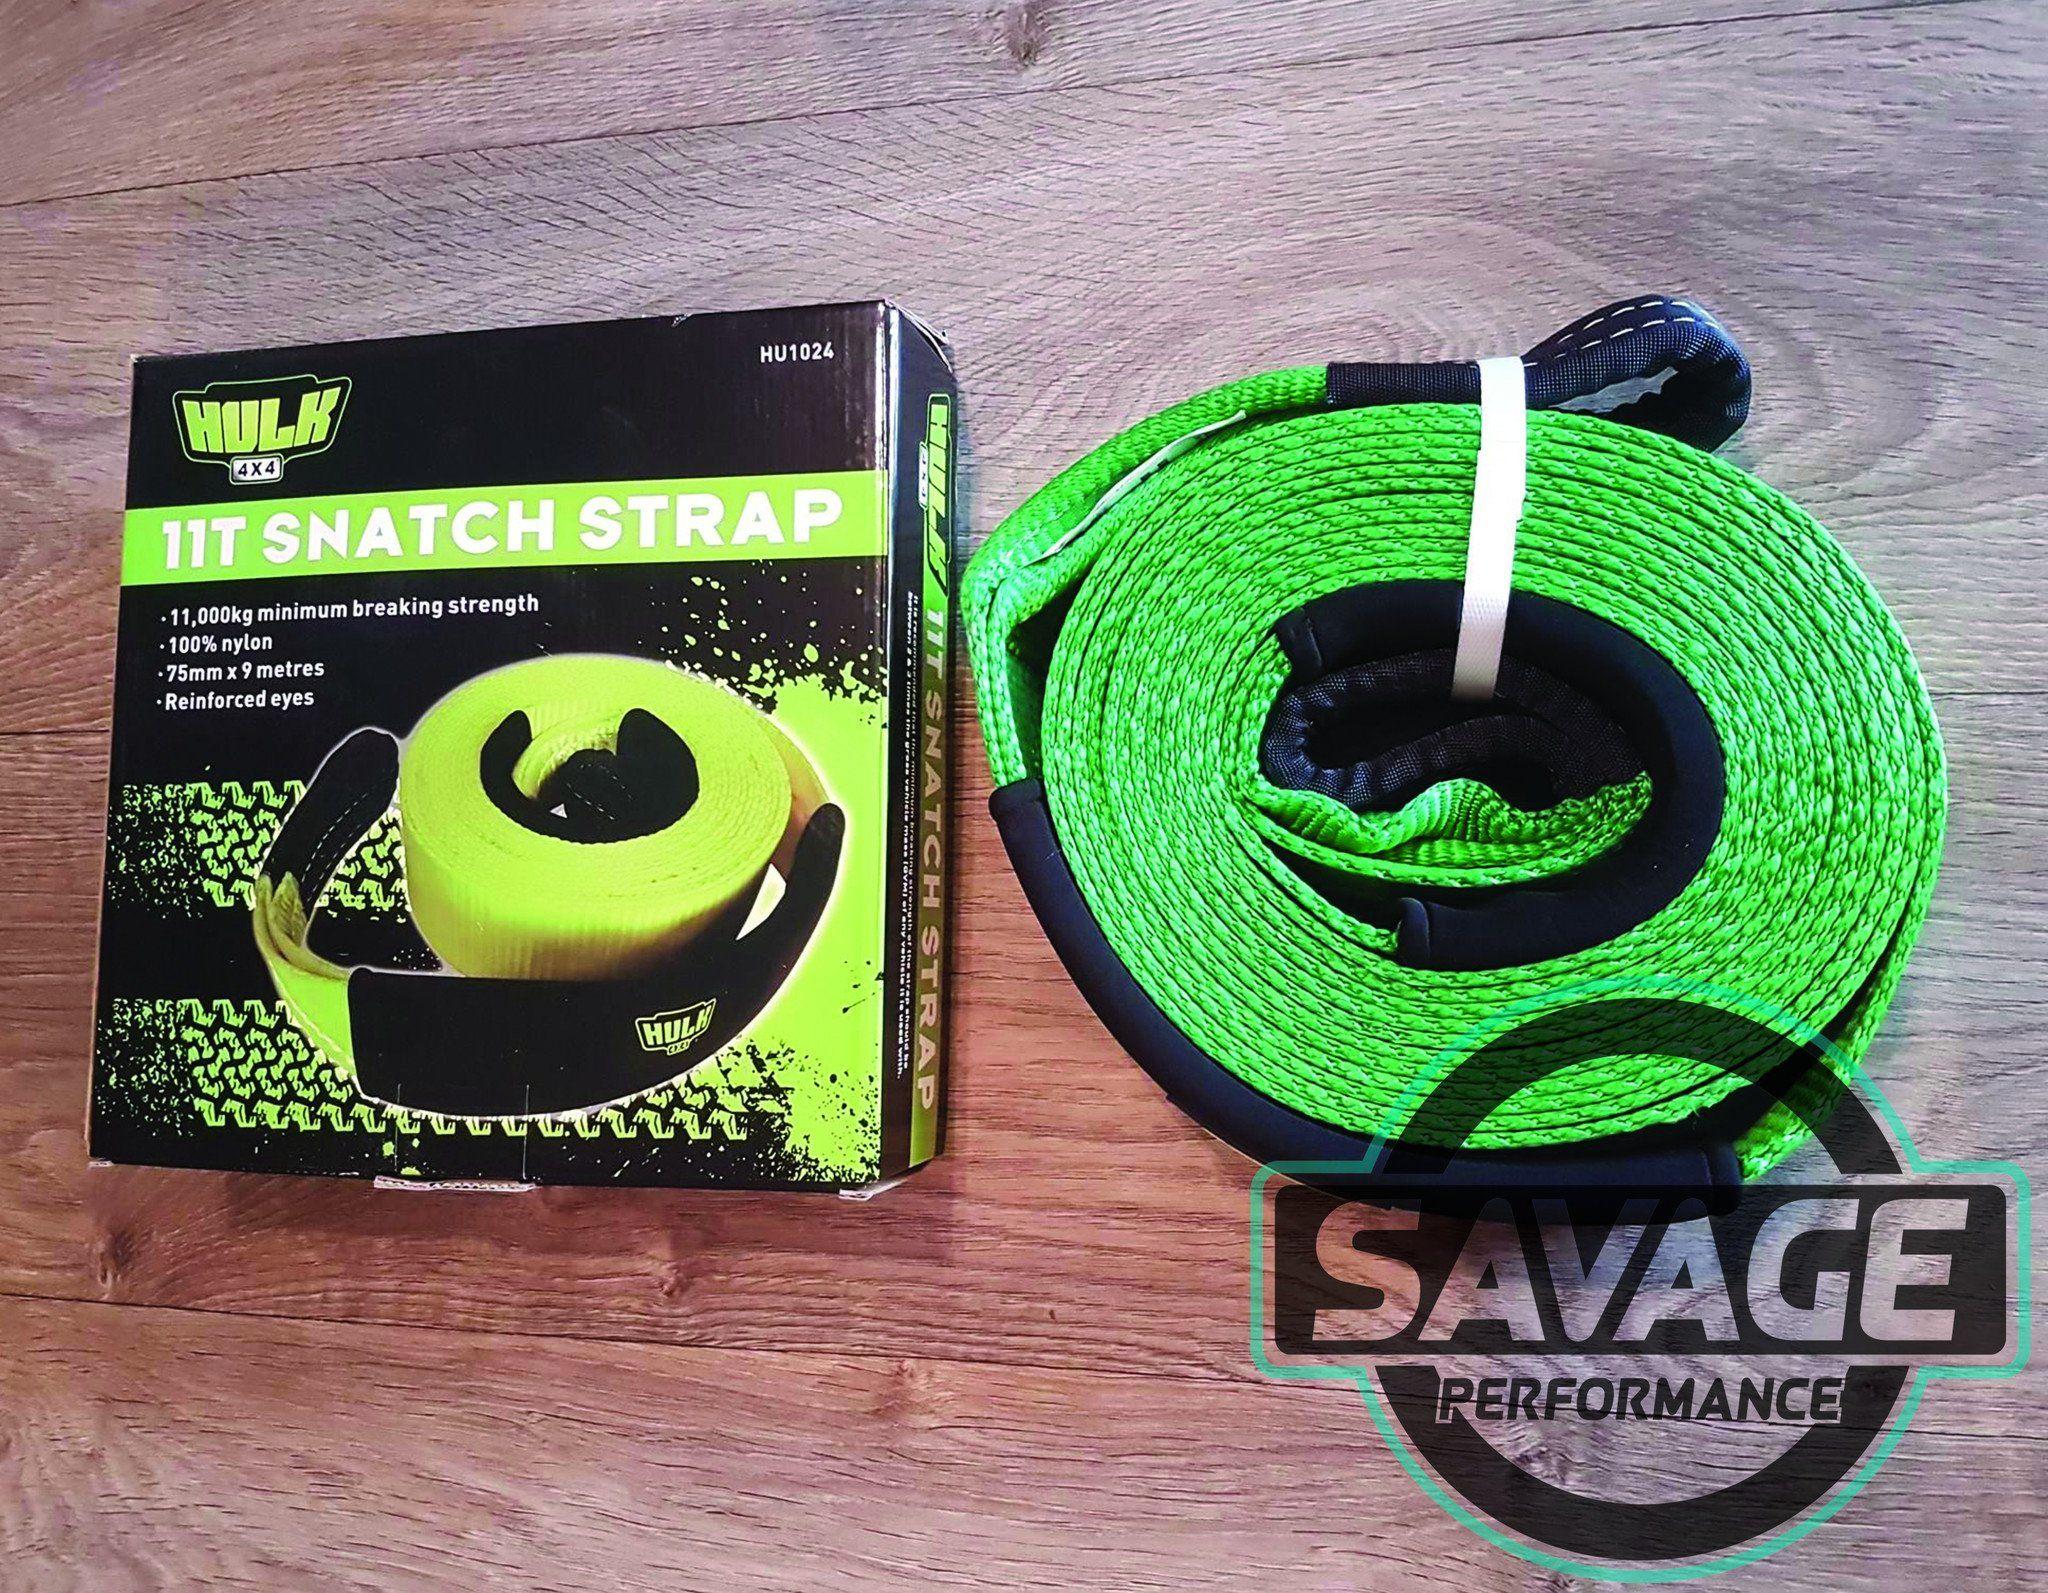 Team Savage Performance Logo - HULK 4x4 11T 11,000kg Snatch Strap 9m – Savage Performance and Spares